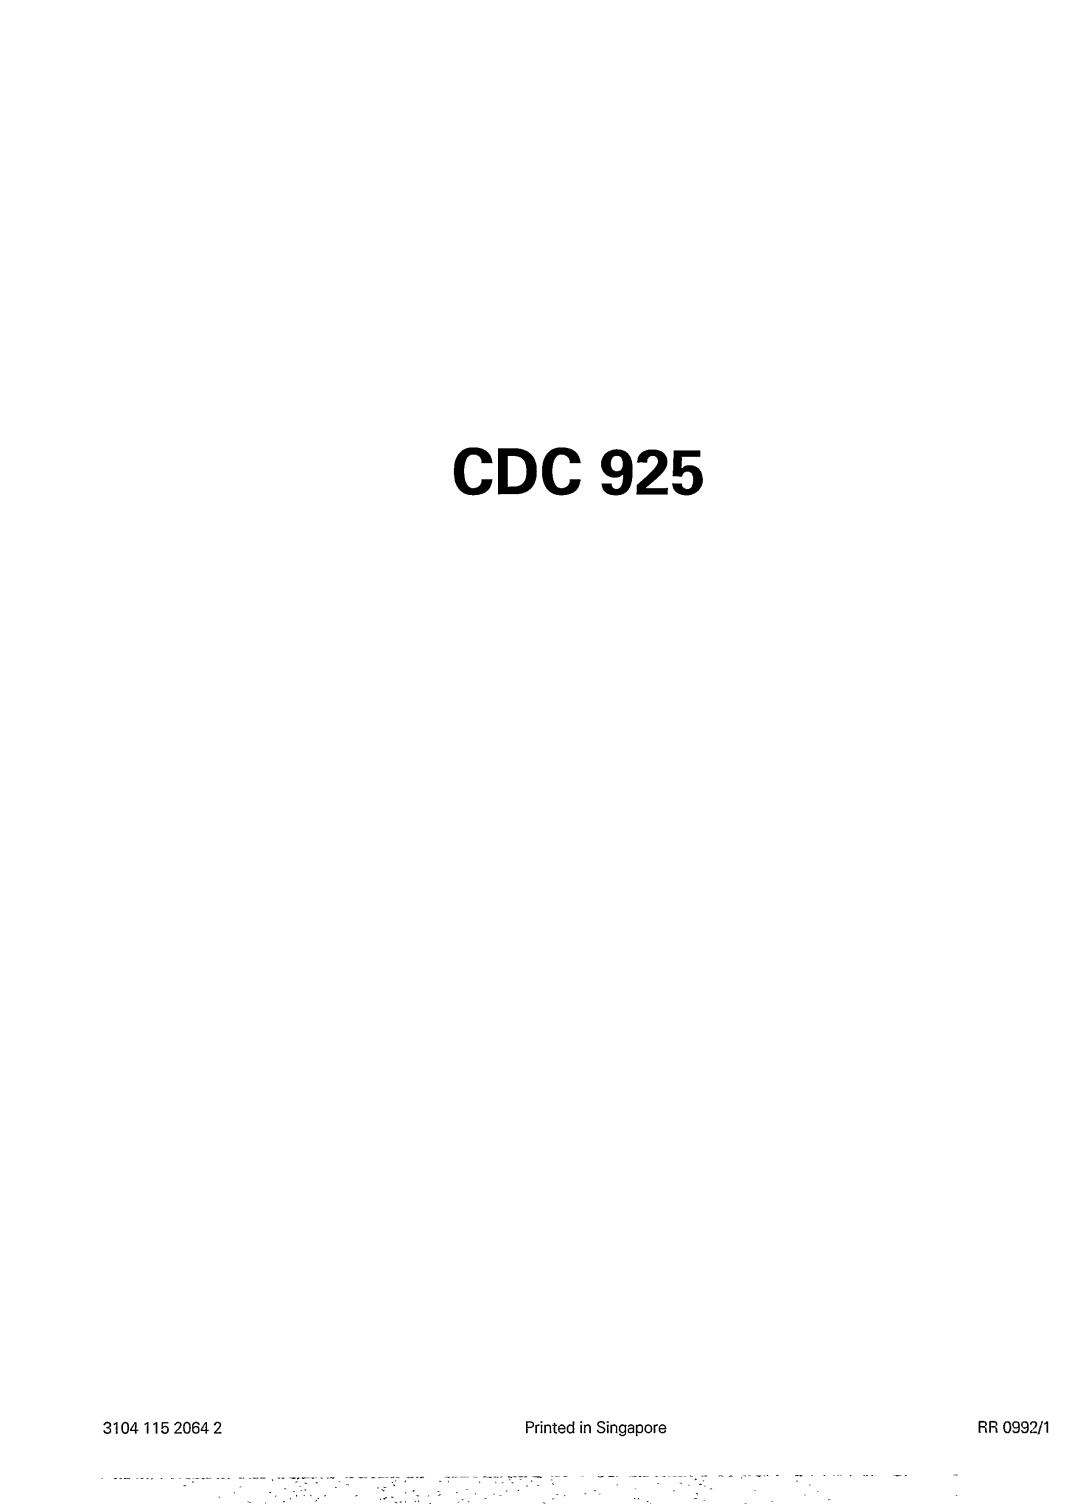 Philips CDC 925/20S manual 